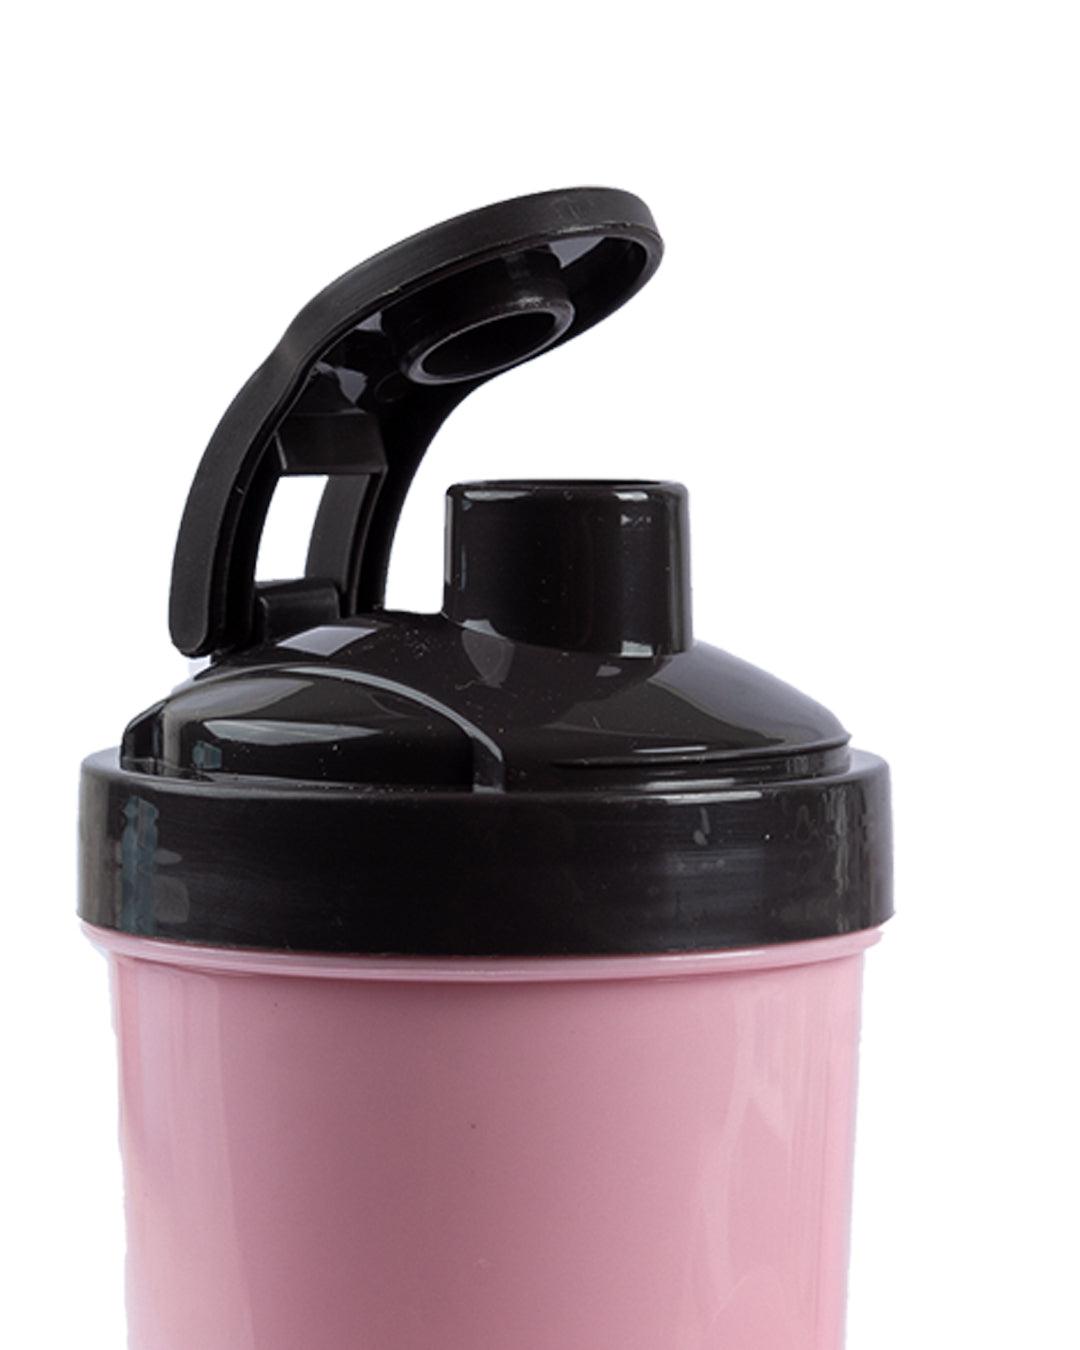 Lunch Box & Water Bottle Set, Pink, Plastic - MARKET 99